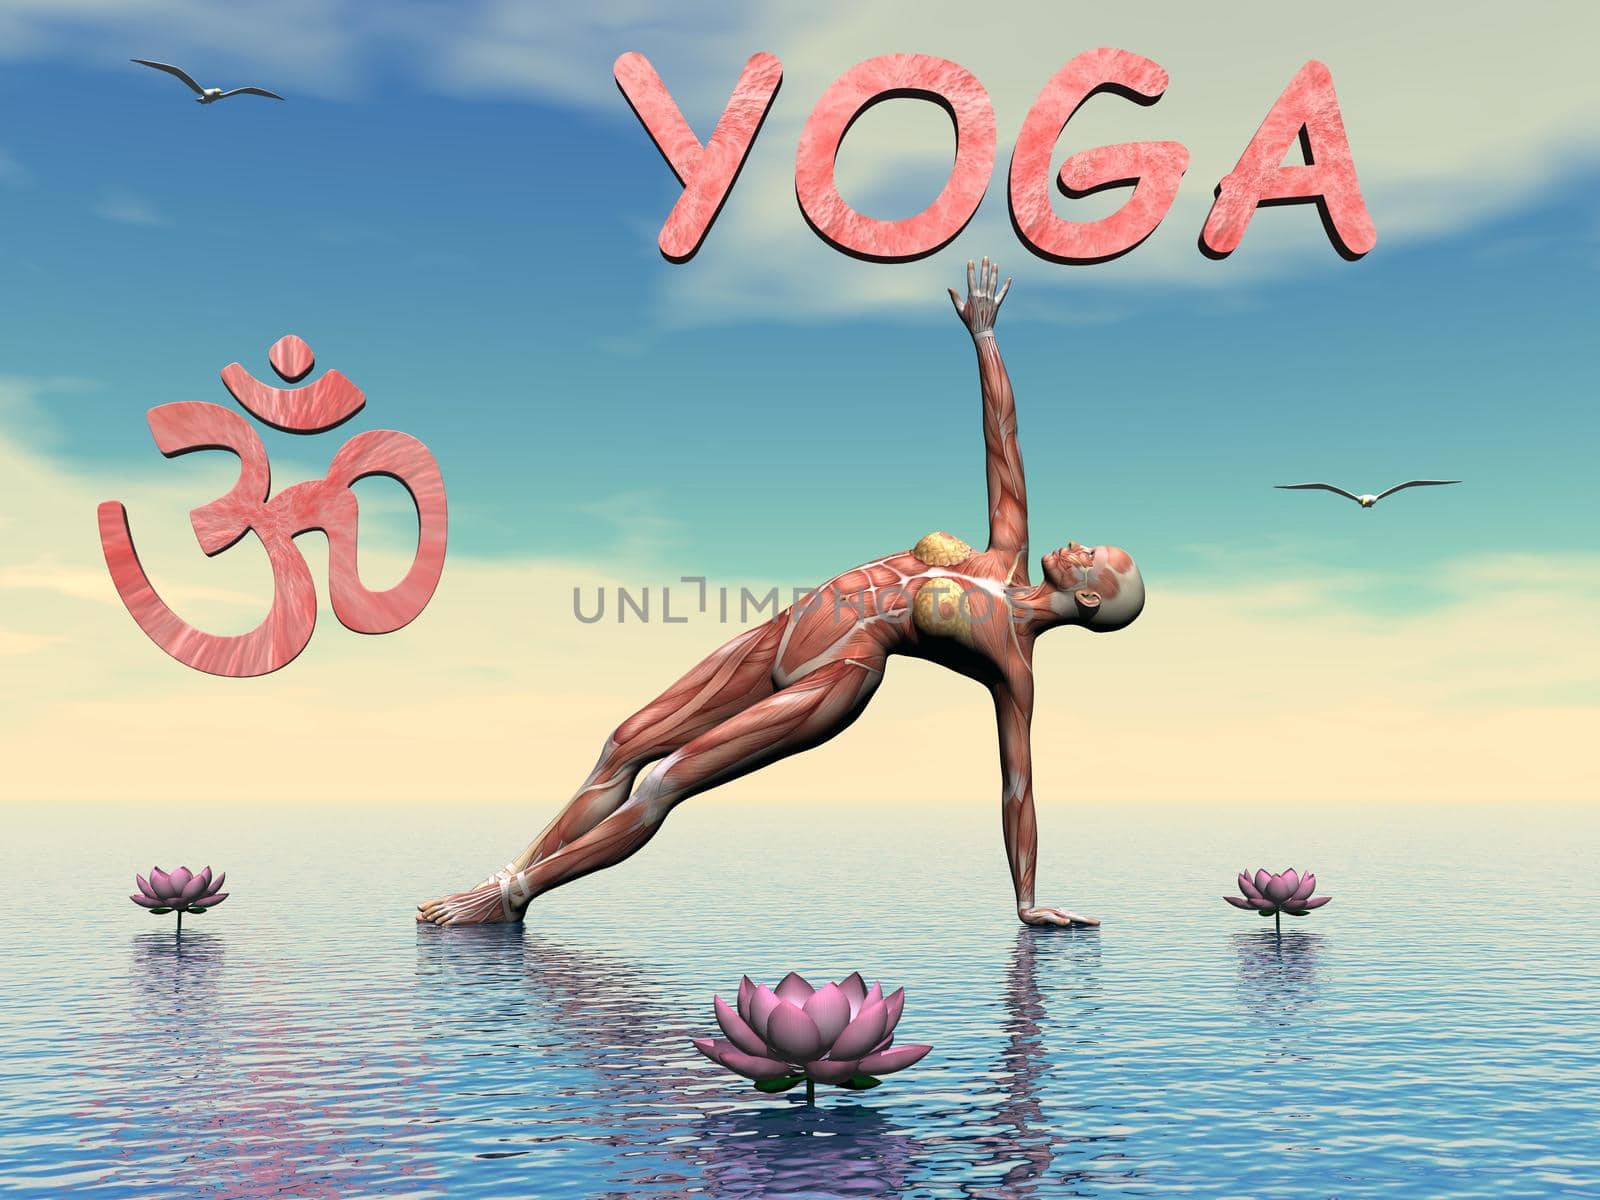 Yoga scene - 3D render by Elenaphotos21